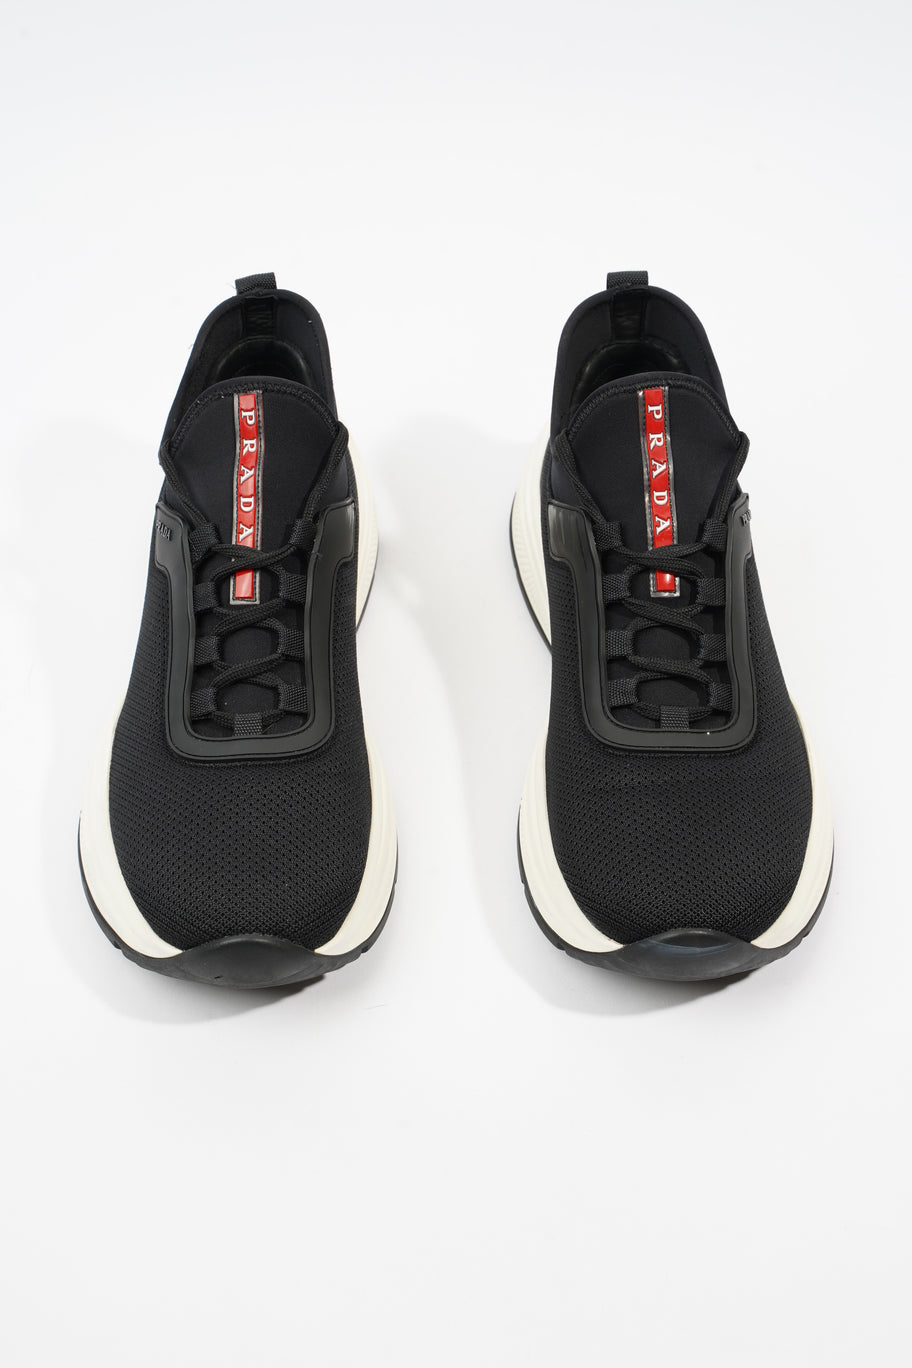 Neoprene Sneakers Black / Red Technical Fabric EU 40 UK 6 Image 8